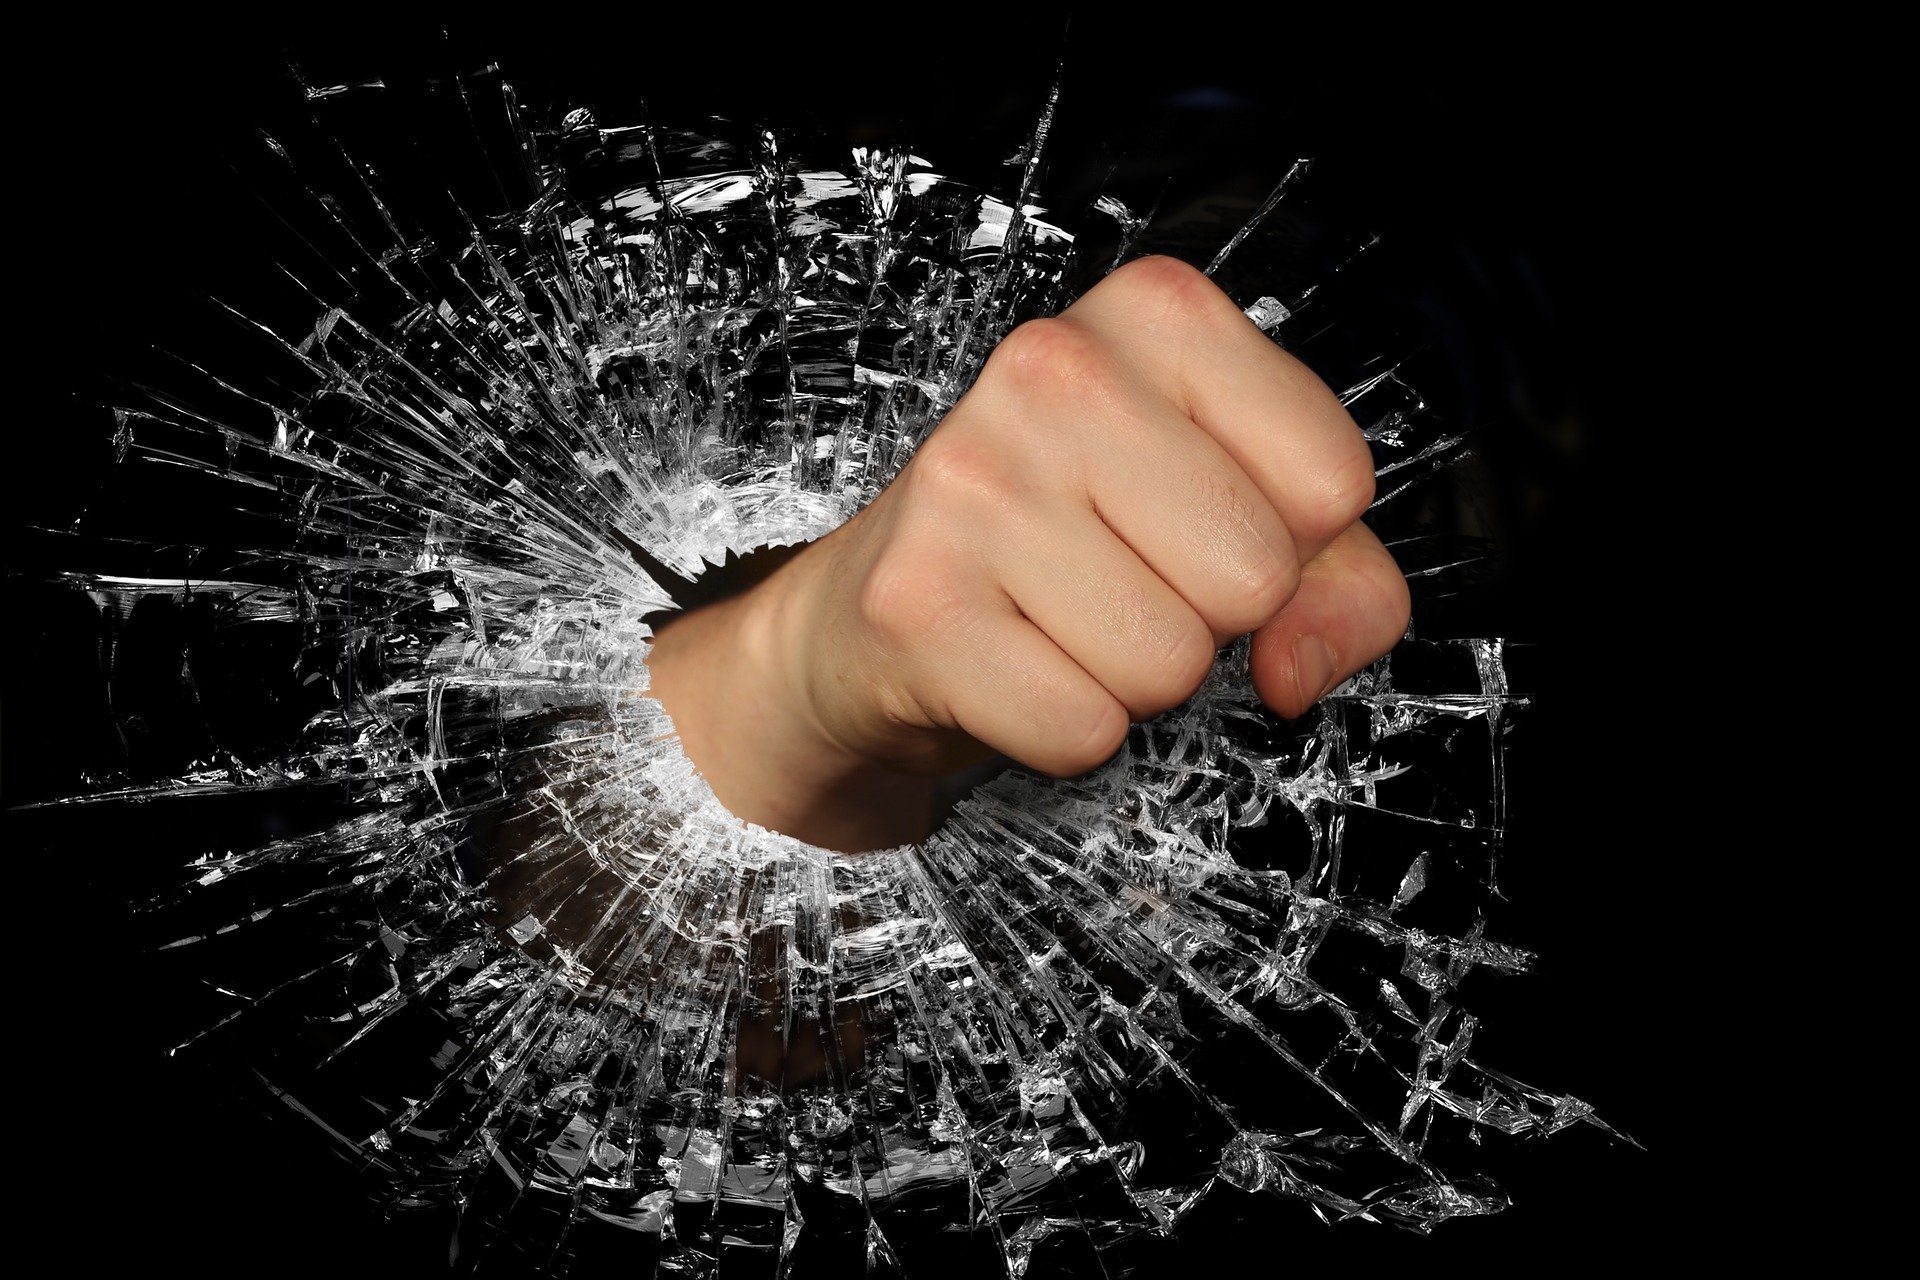 Fist punching through glass